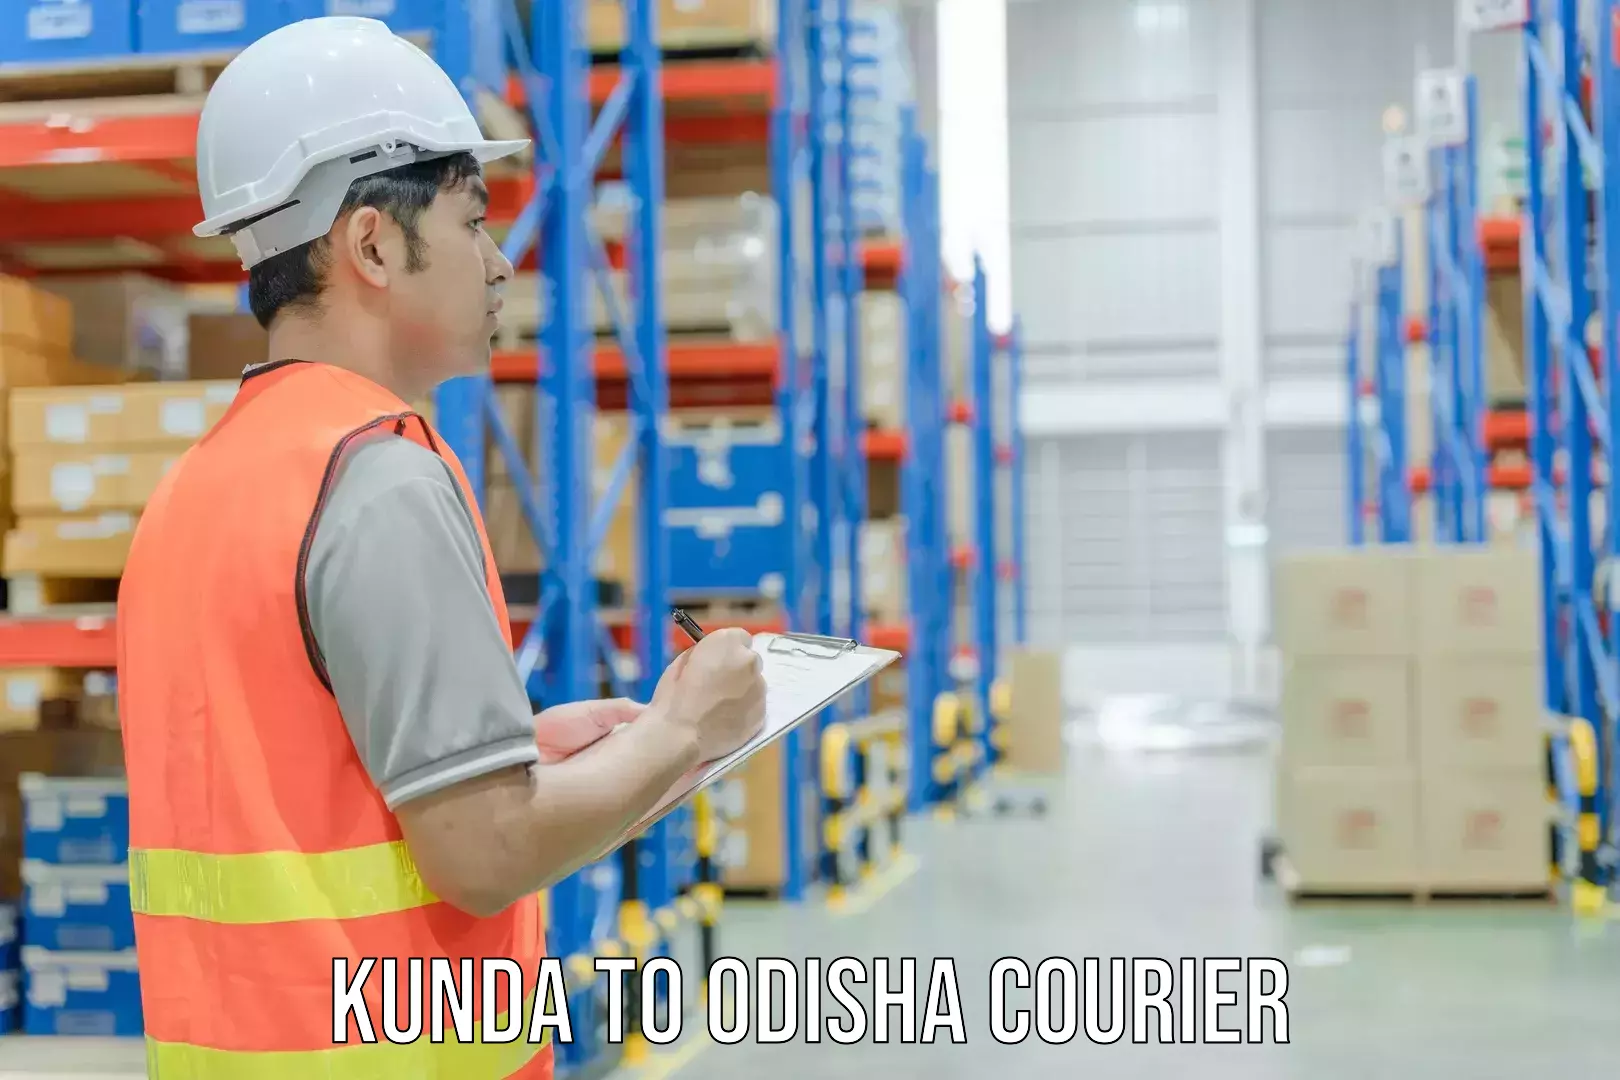 Courier service comparison in Kunda to Kishorenagar